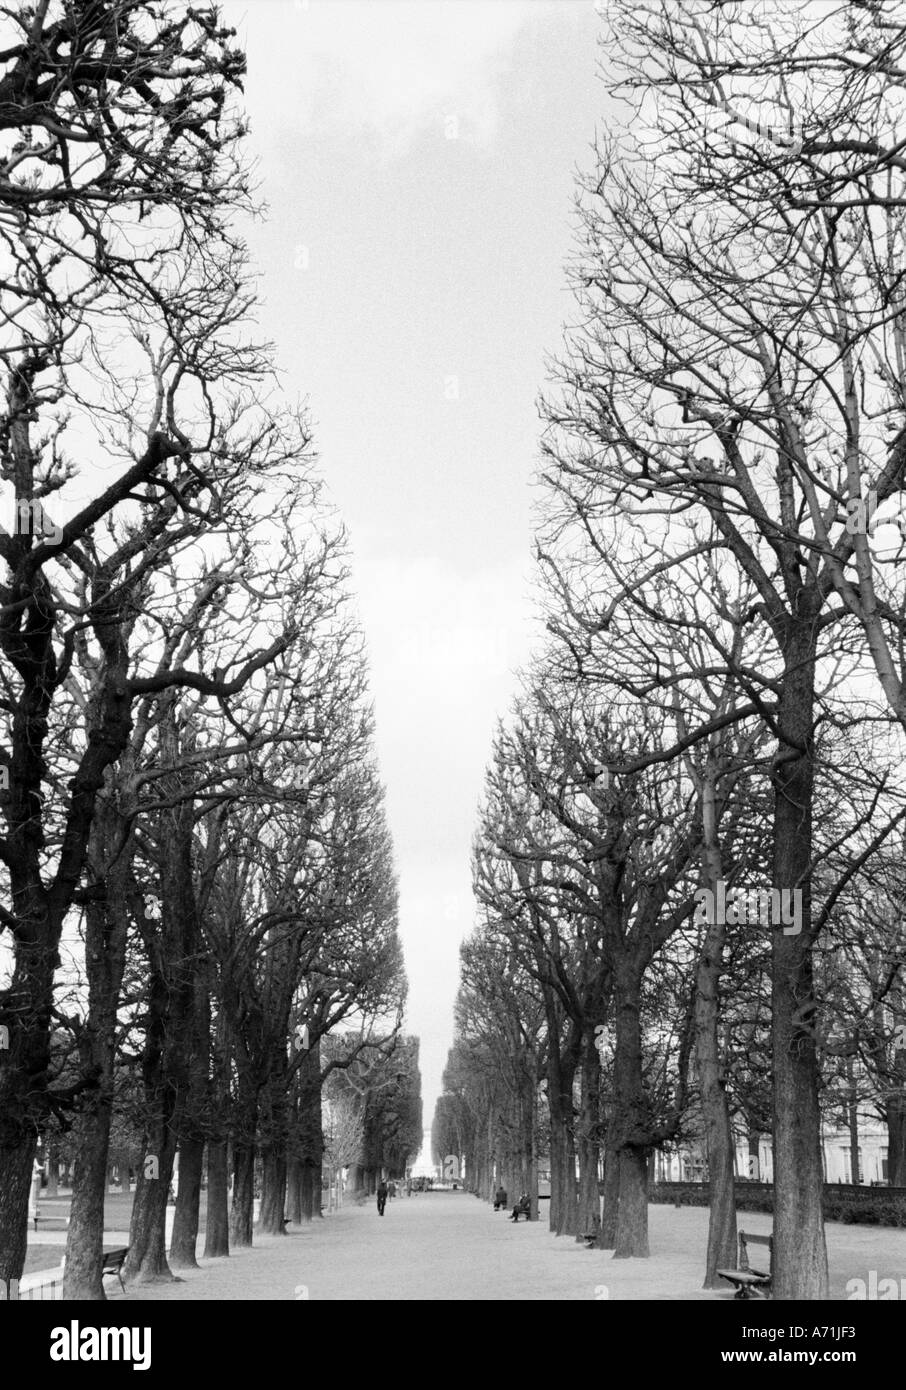 Europa, Francia, París. Árboles de invierno, Marco Polo jardín. Boulevard Saint Michel. Foto de stock